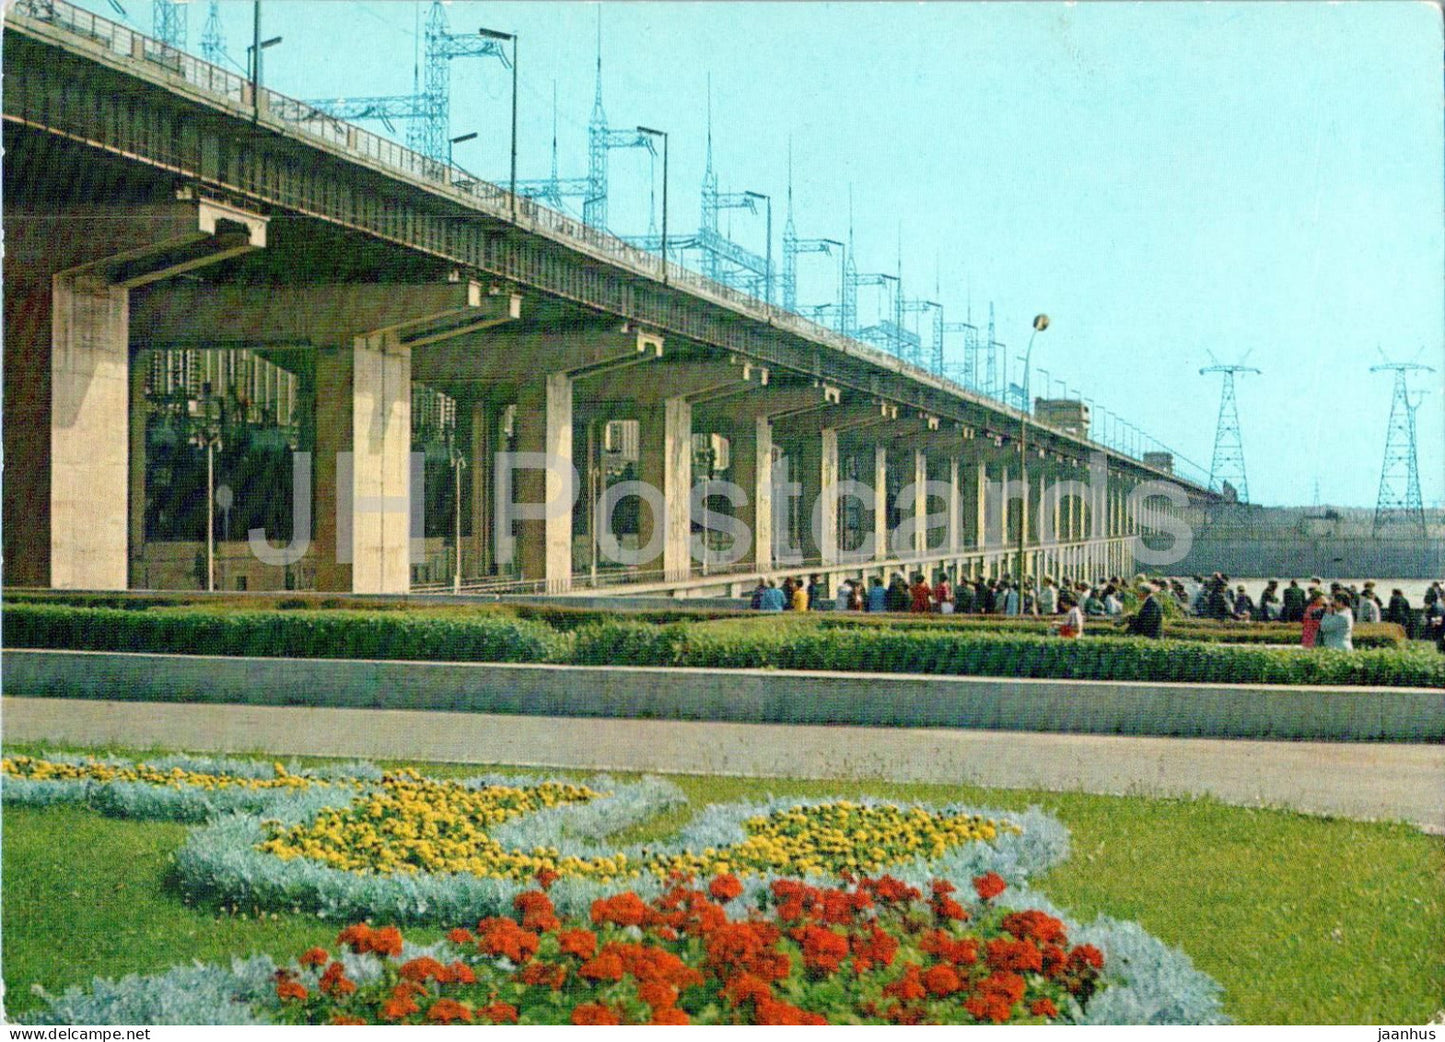 Volgograd - Volzhskaya HPP - Volga Hydroelectric Power Station - postal stationery - 1977 - Russia USSR - unused - JH Postcards